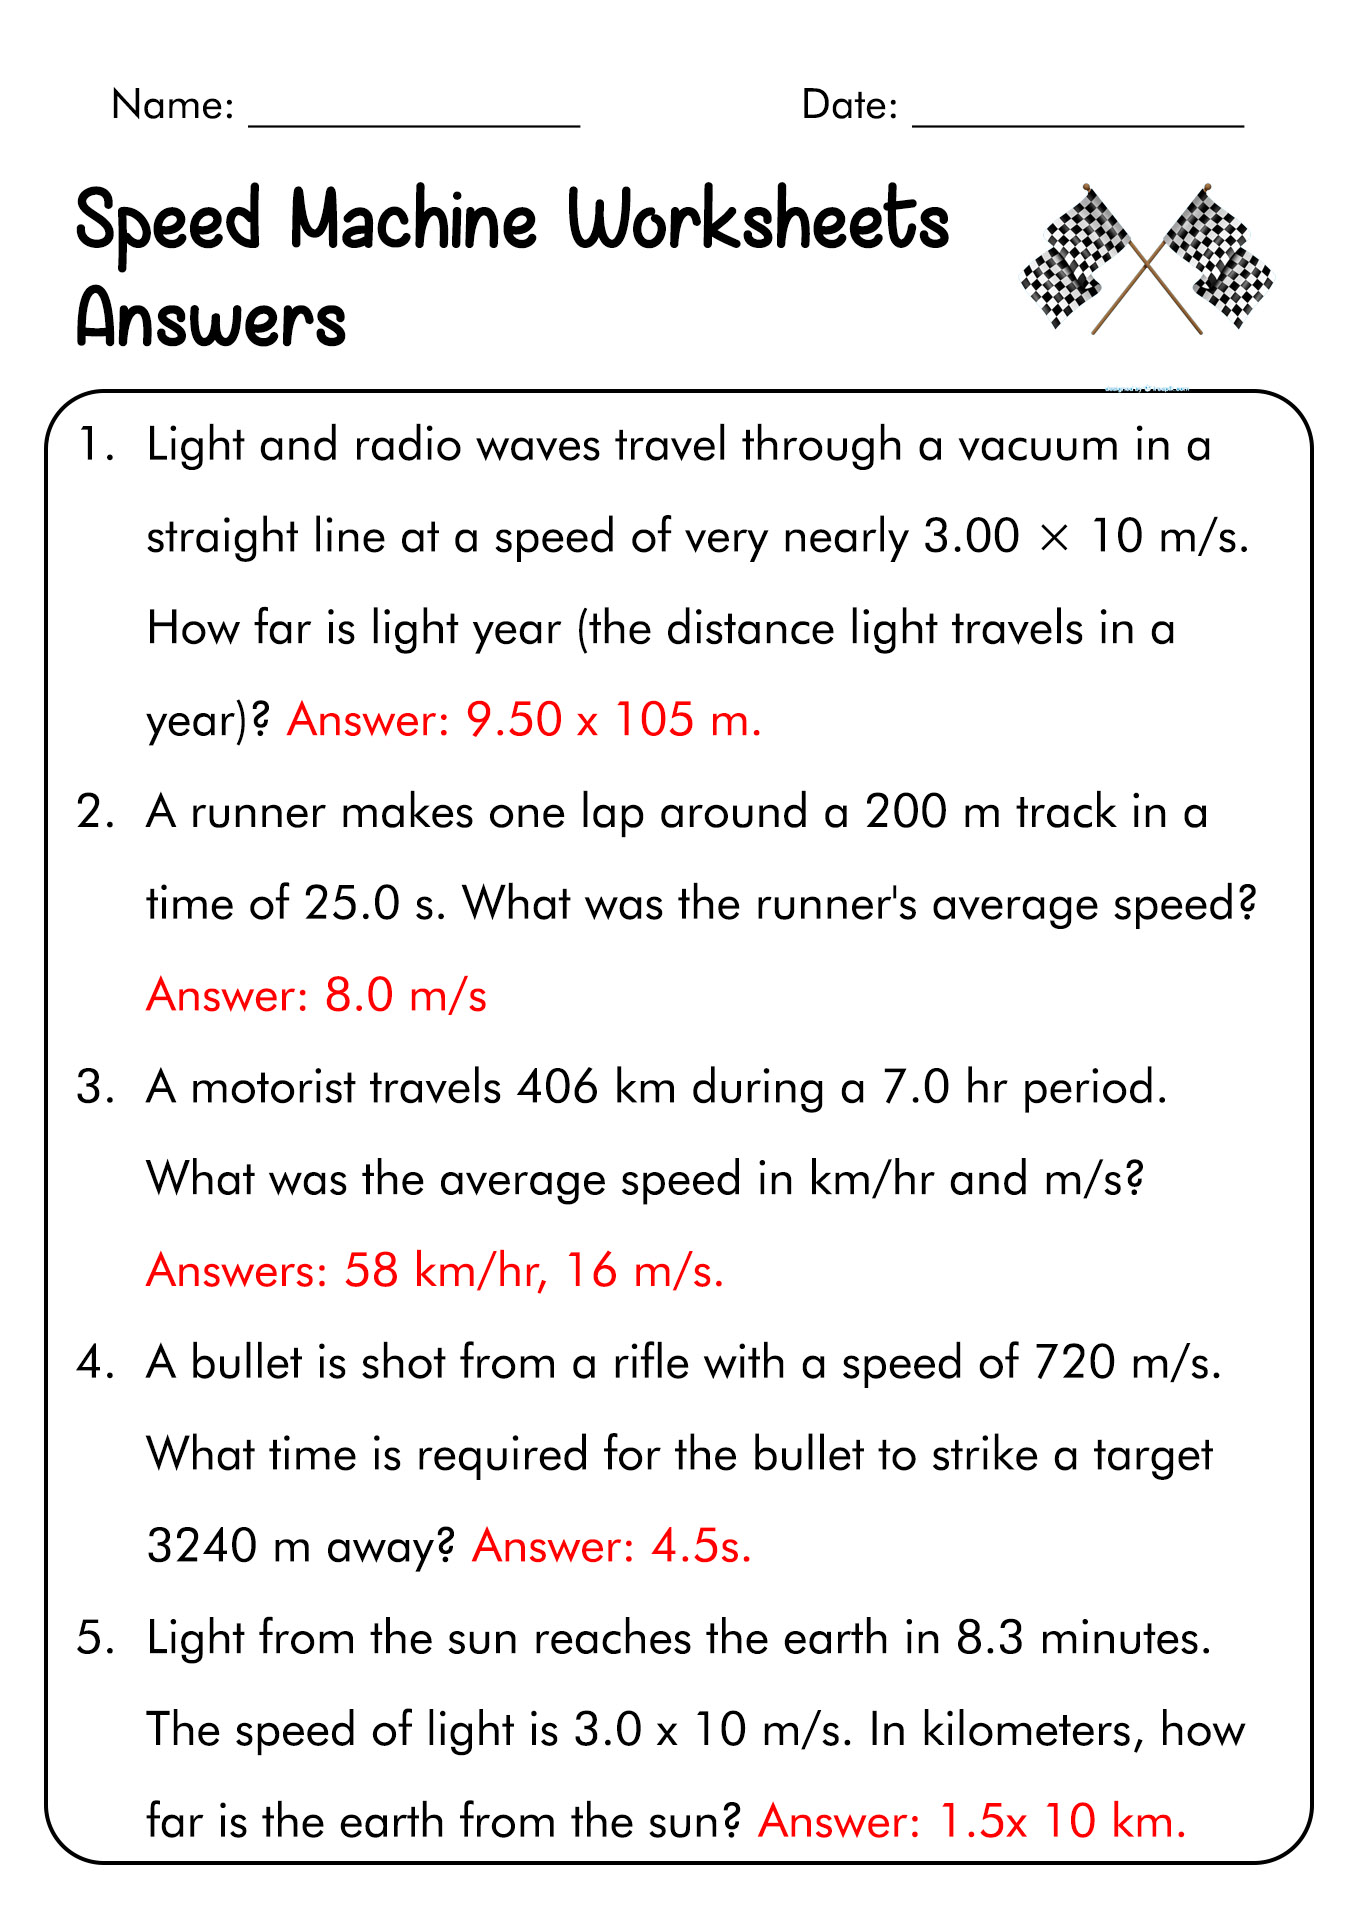 Speed Machines Worksheet Answers